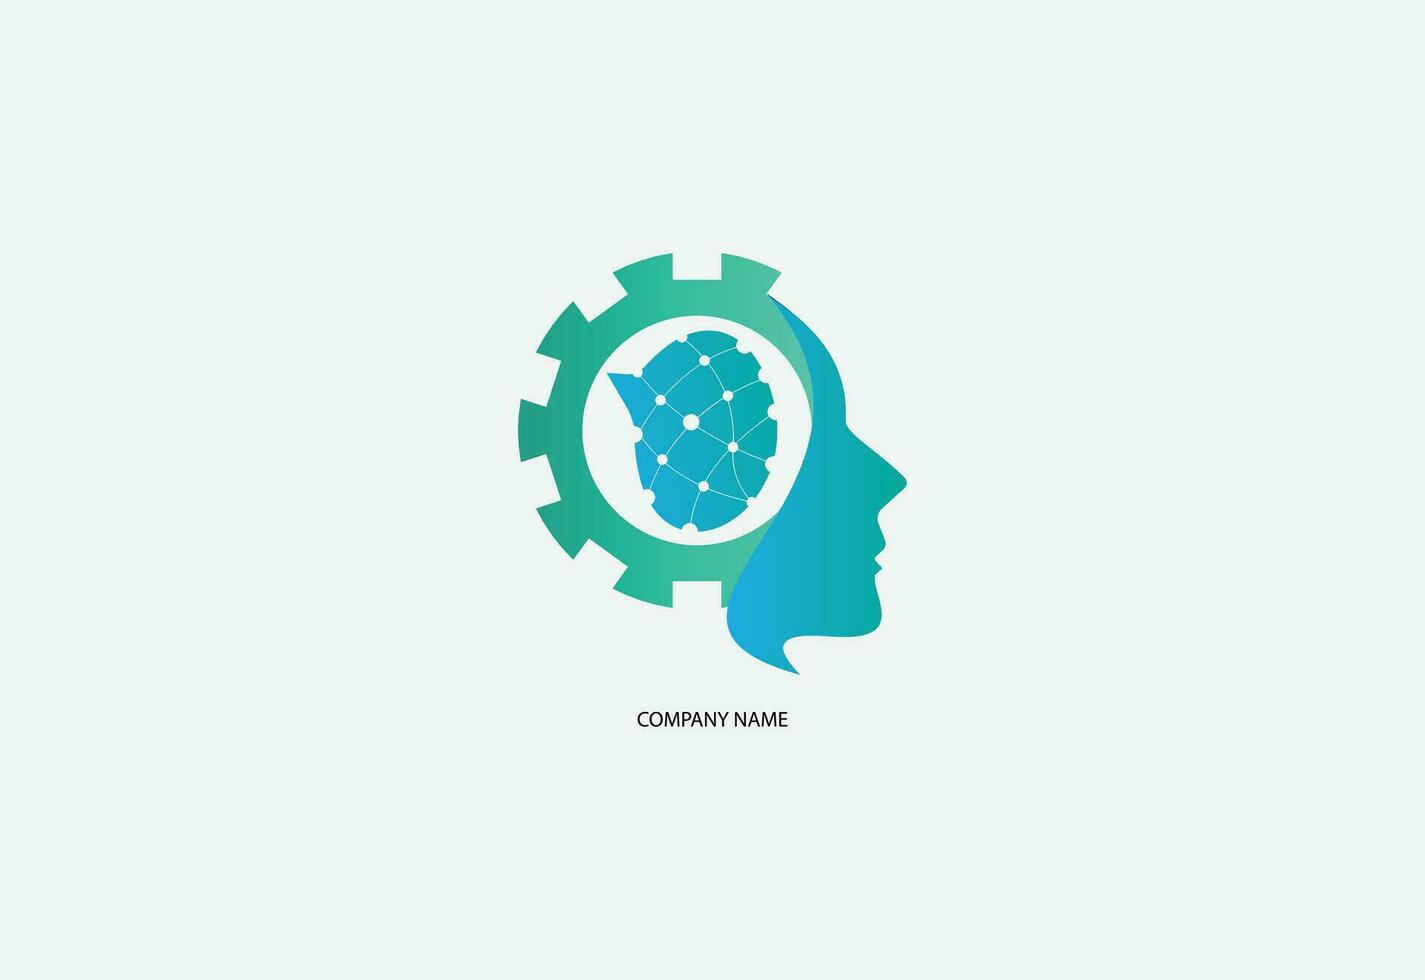 testa umano inteligente tecnologia logo vettore, cervello umano artificiale logo vettore